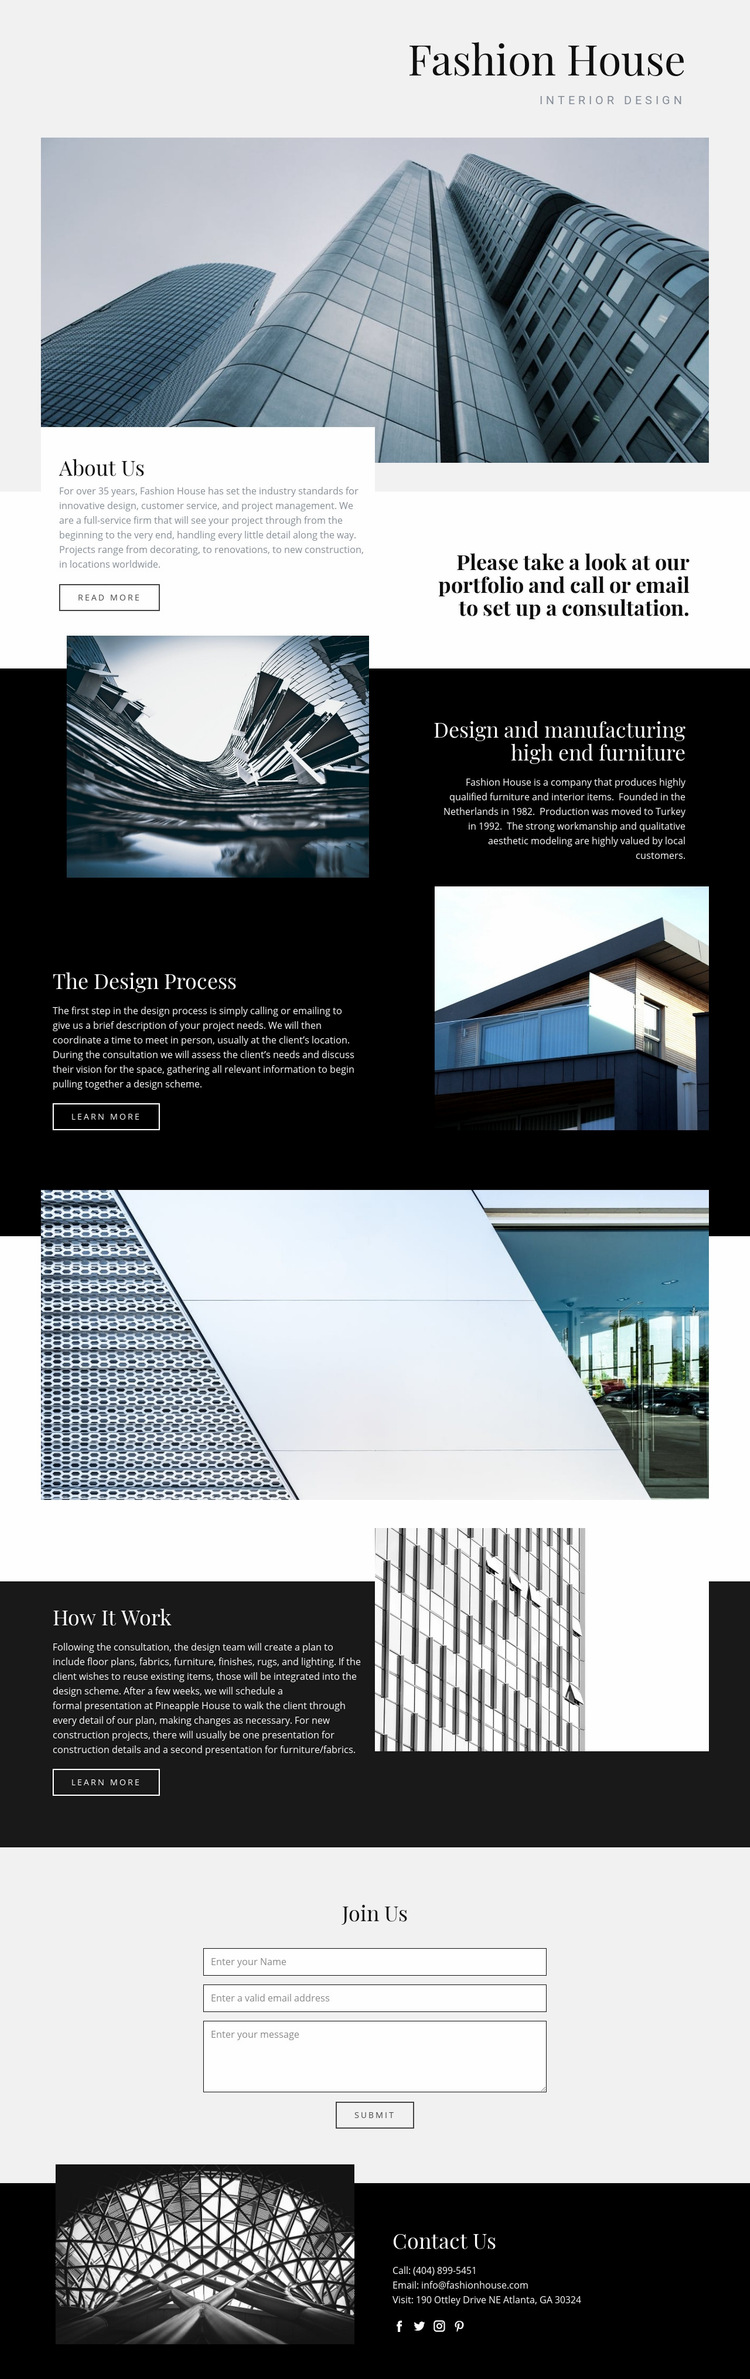 Fashion House Web Page Design